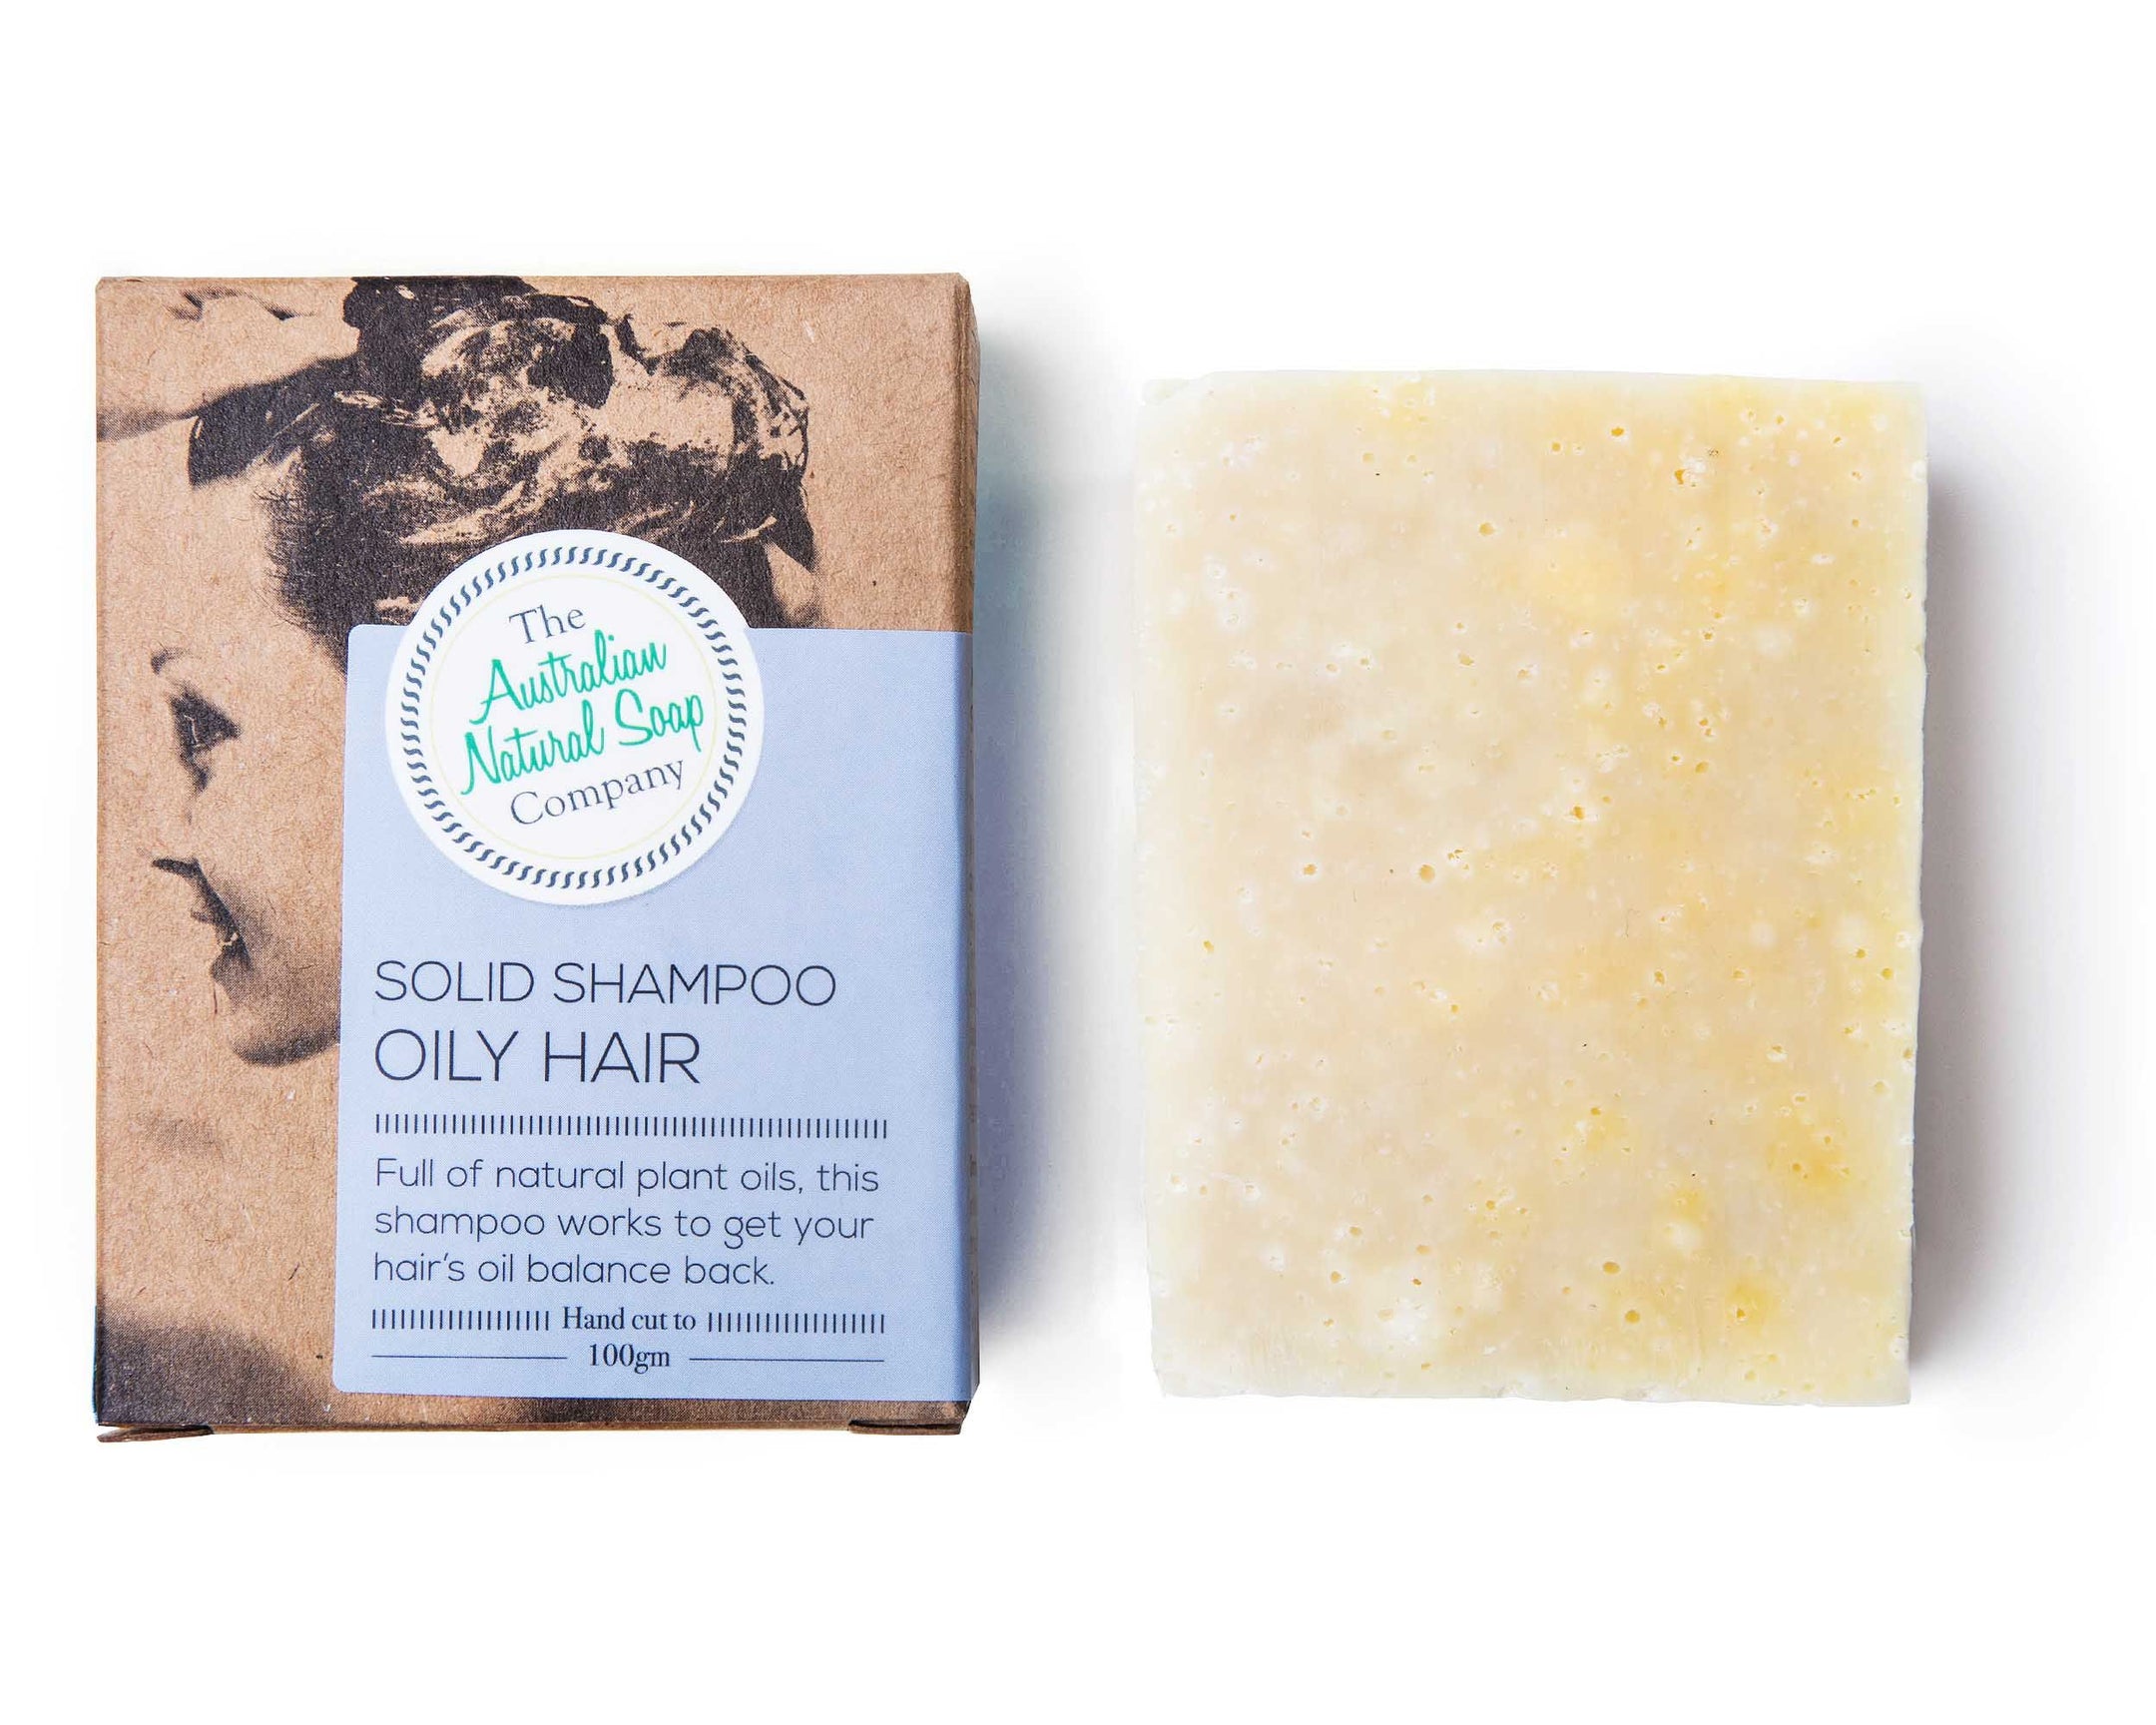 Australian Natural Soap Company shampoo bar for oily hair front of box and unpacked bar